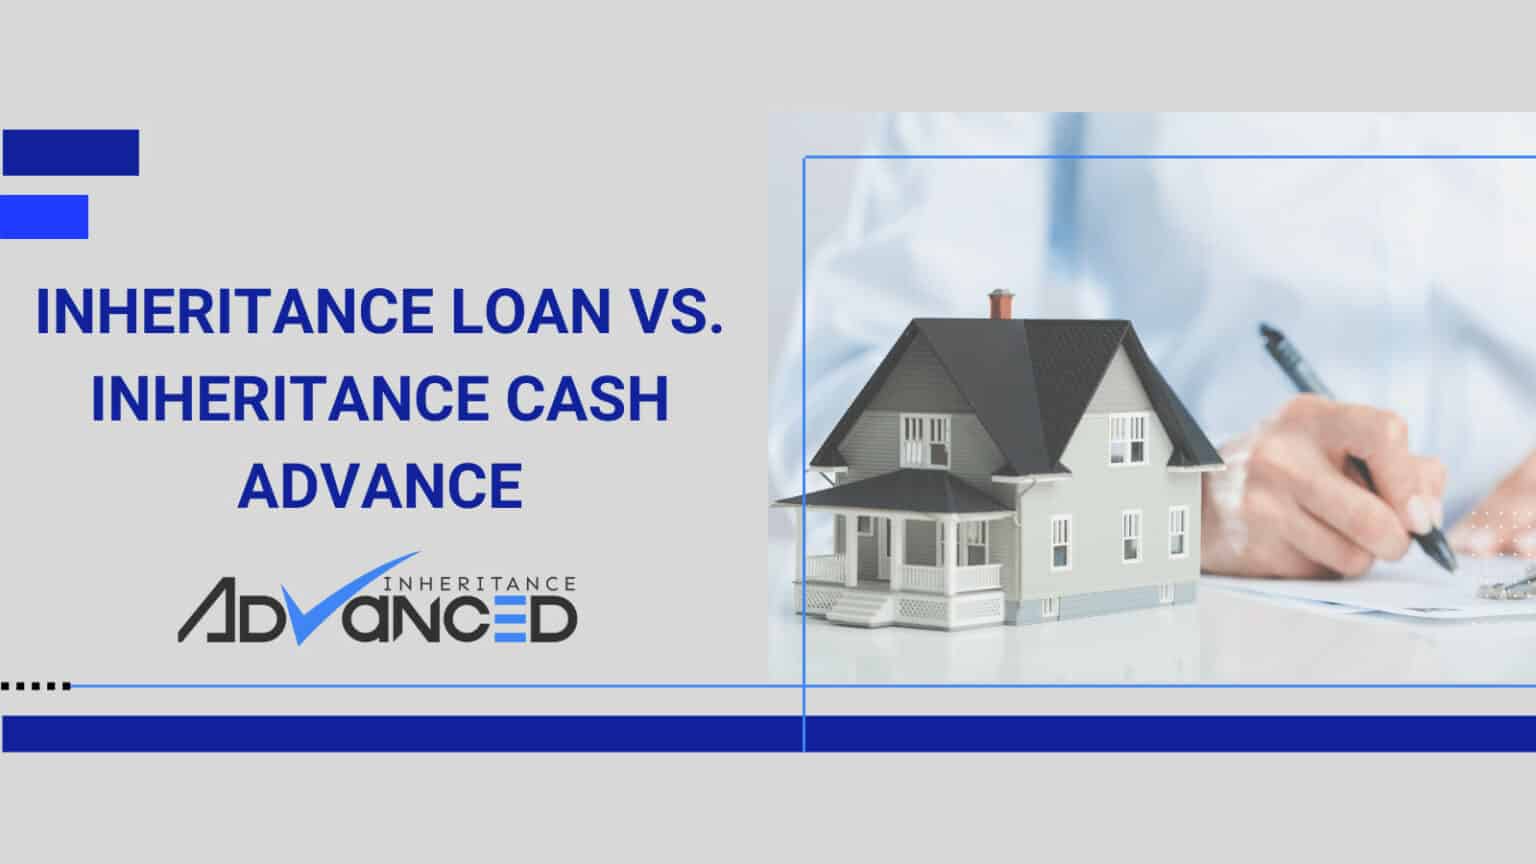 Loan vs Advance